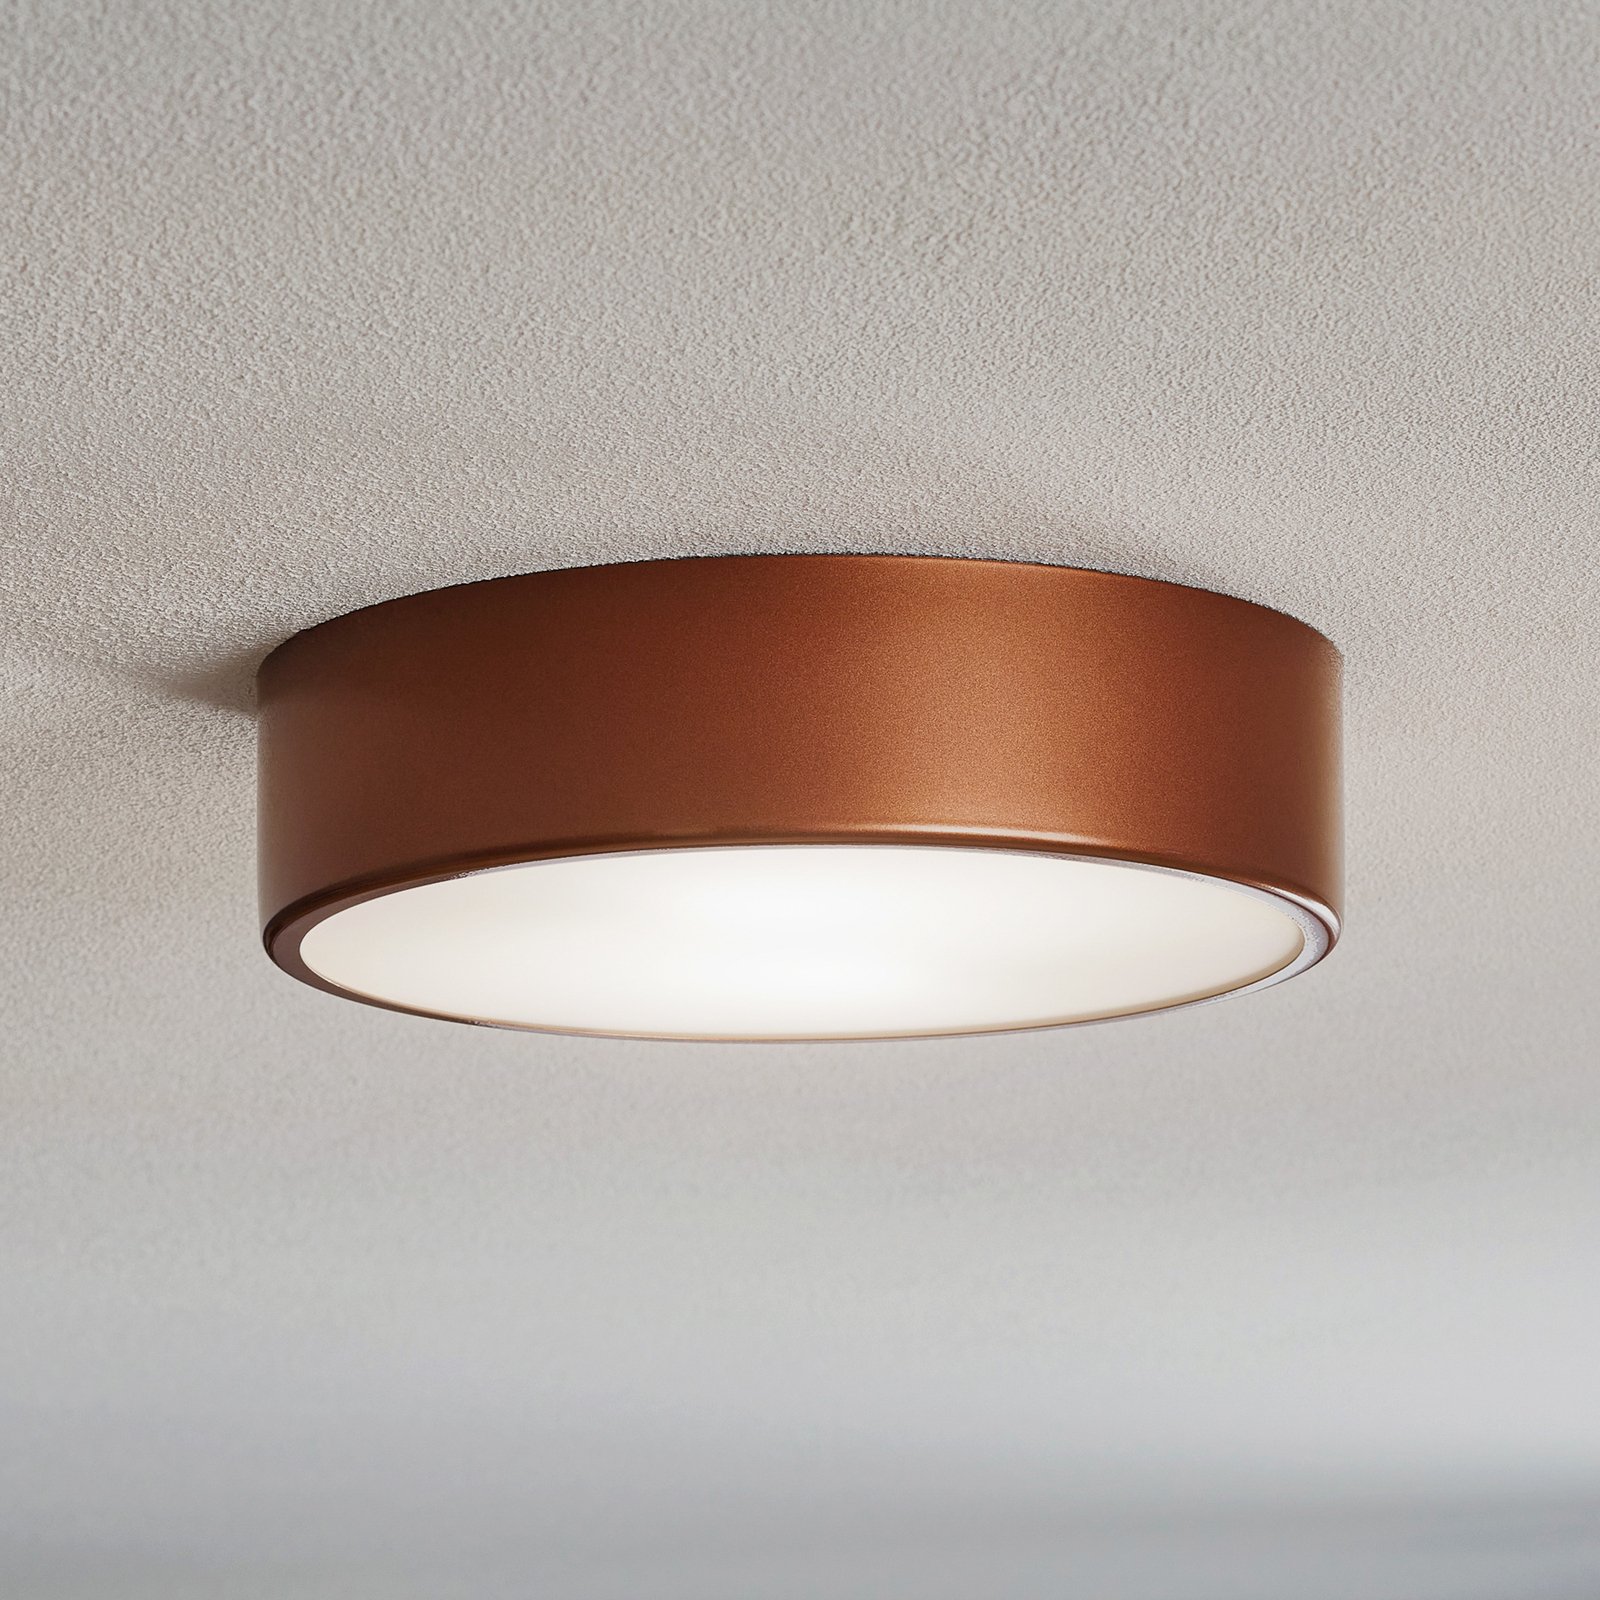 Cleo 300 ceiling light, Ø 30 cm copper